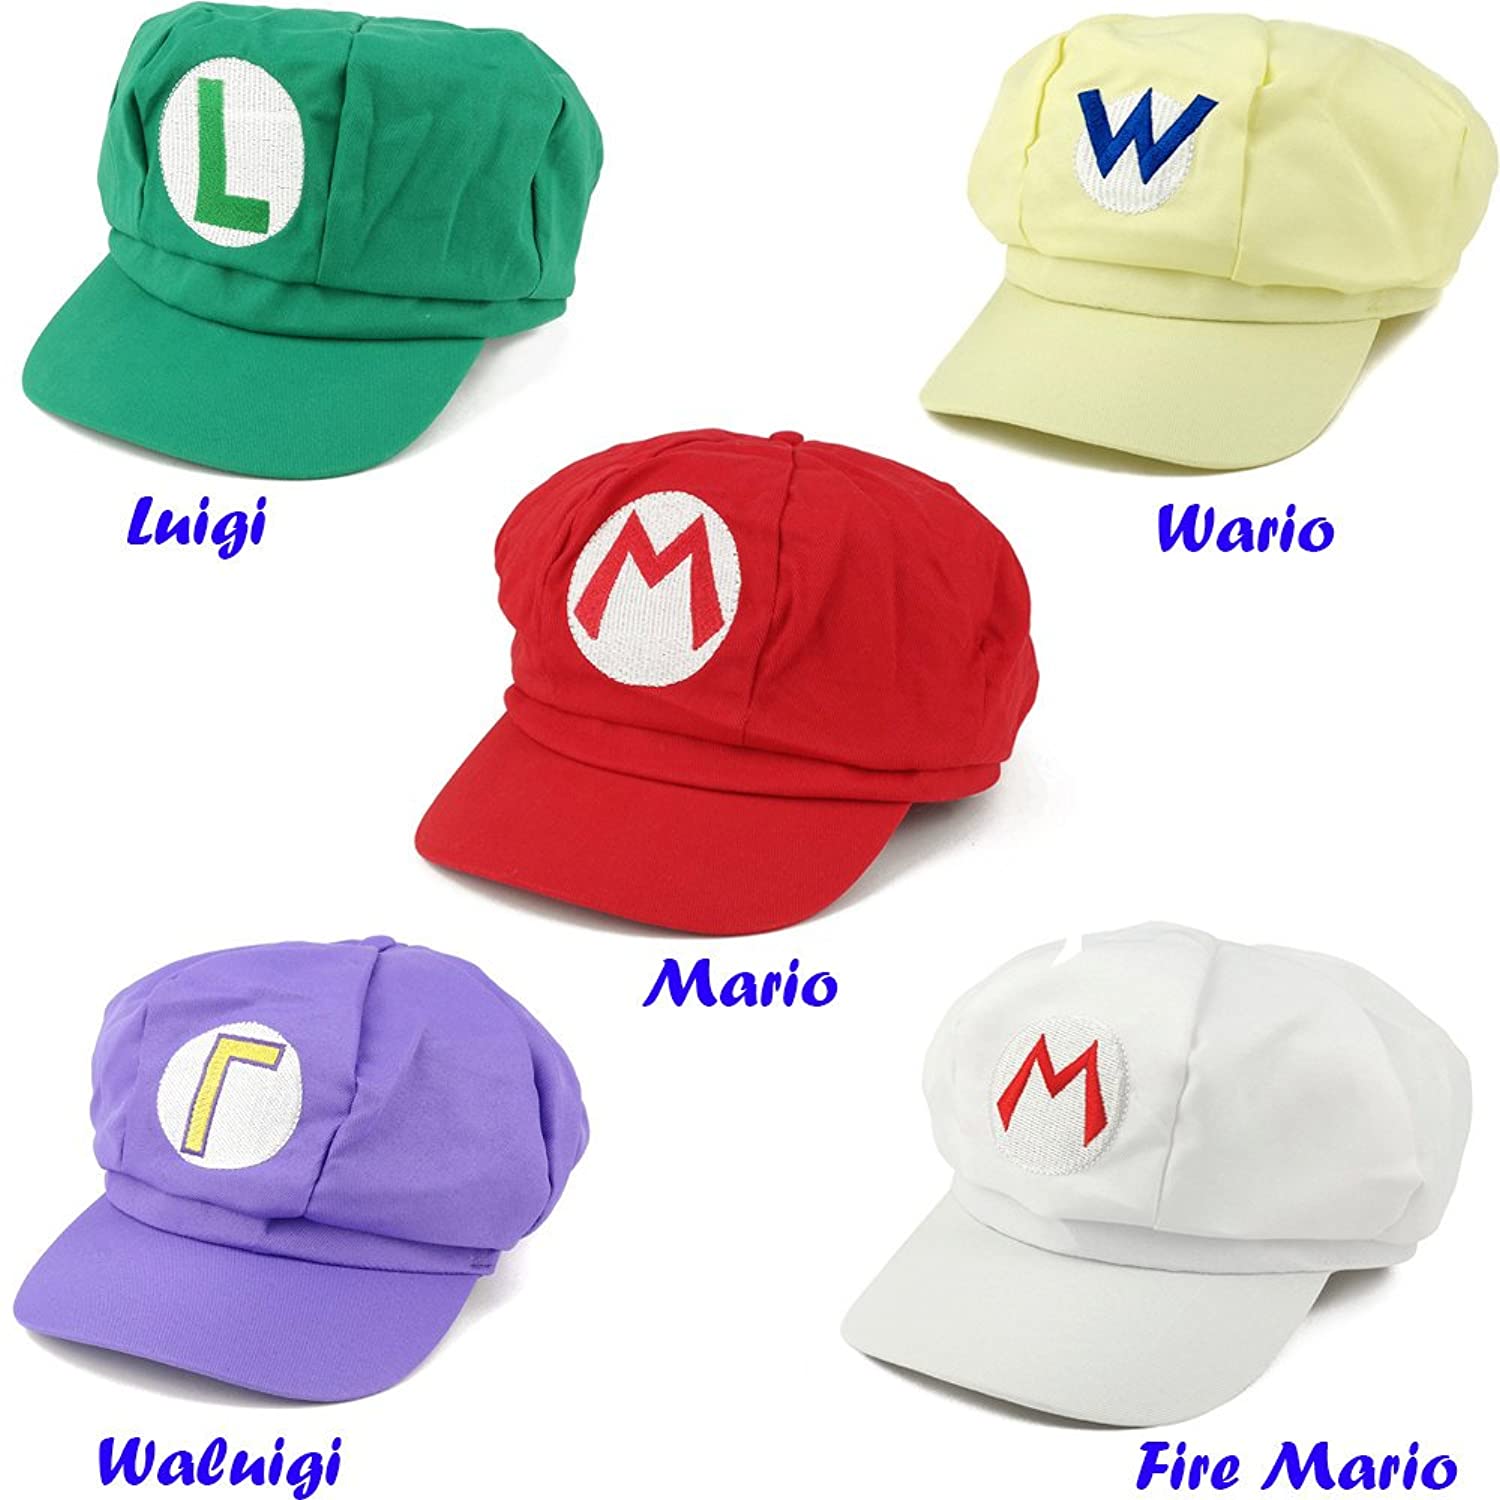 Mario Luigi Wario Waluigi Fire Mario Embroidered Costume Newsboy Hat - Red